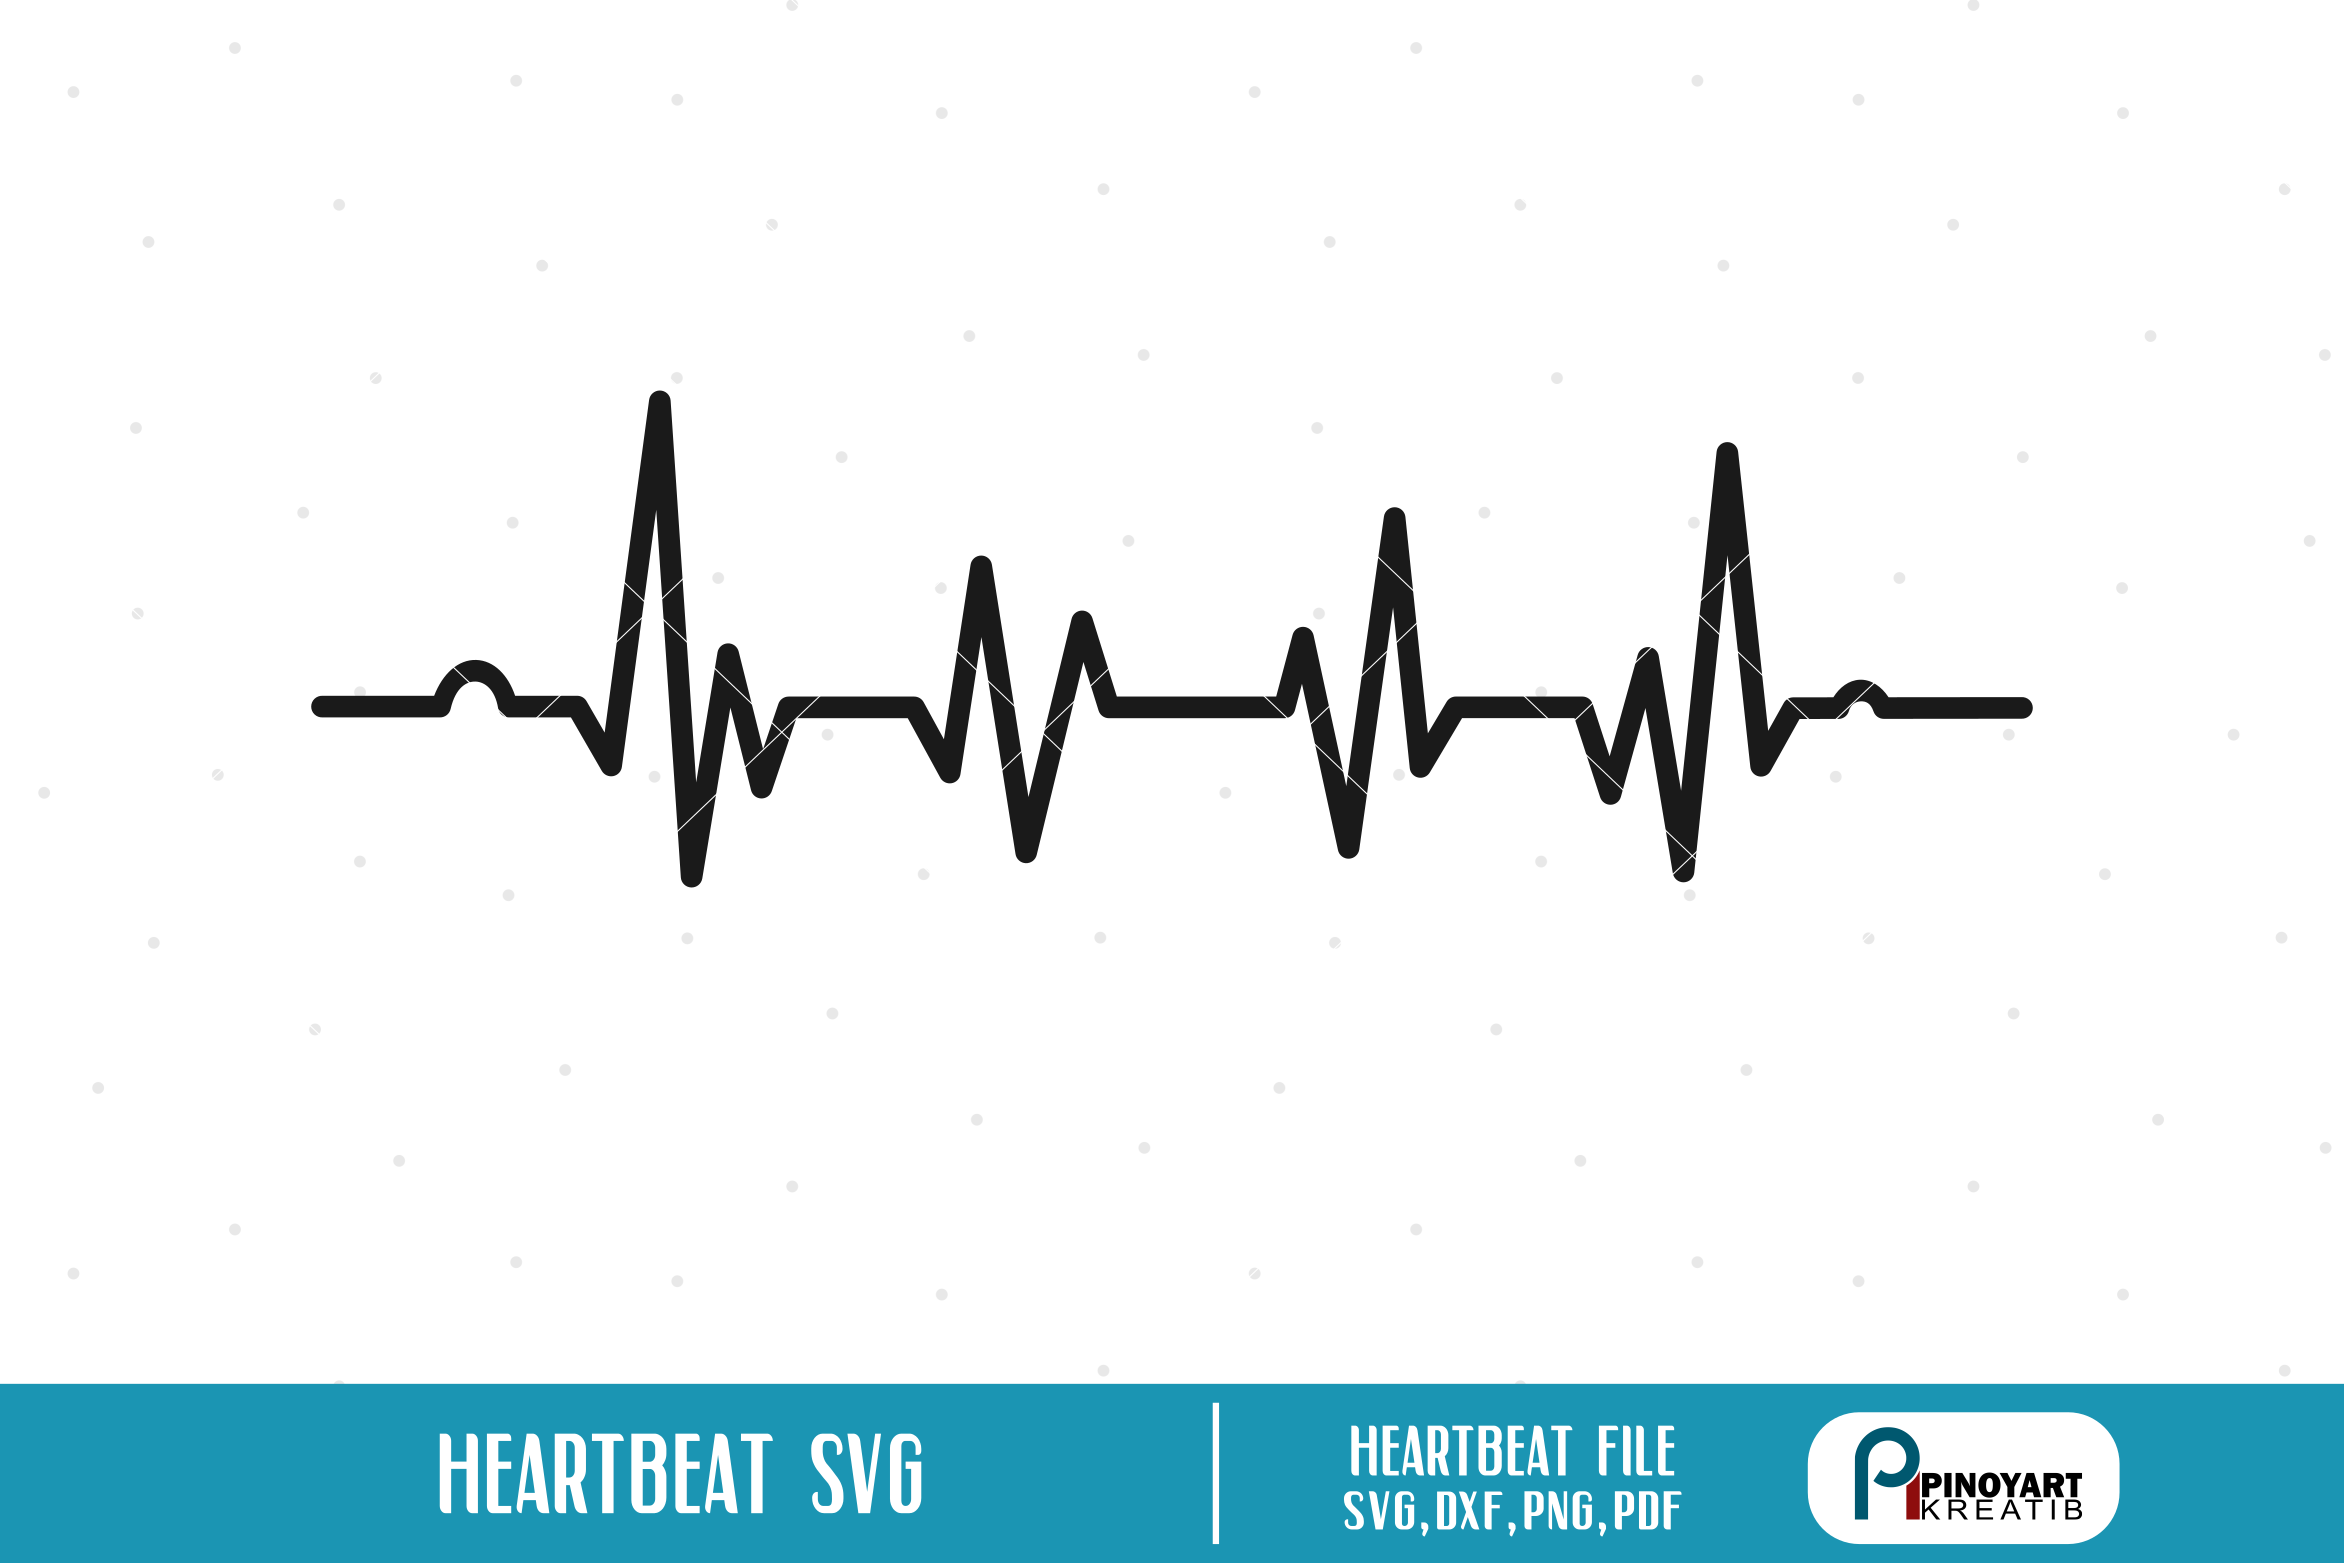 Heartbeat svg - a heartbeat vector file